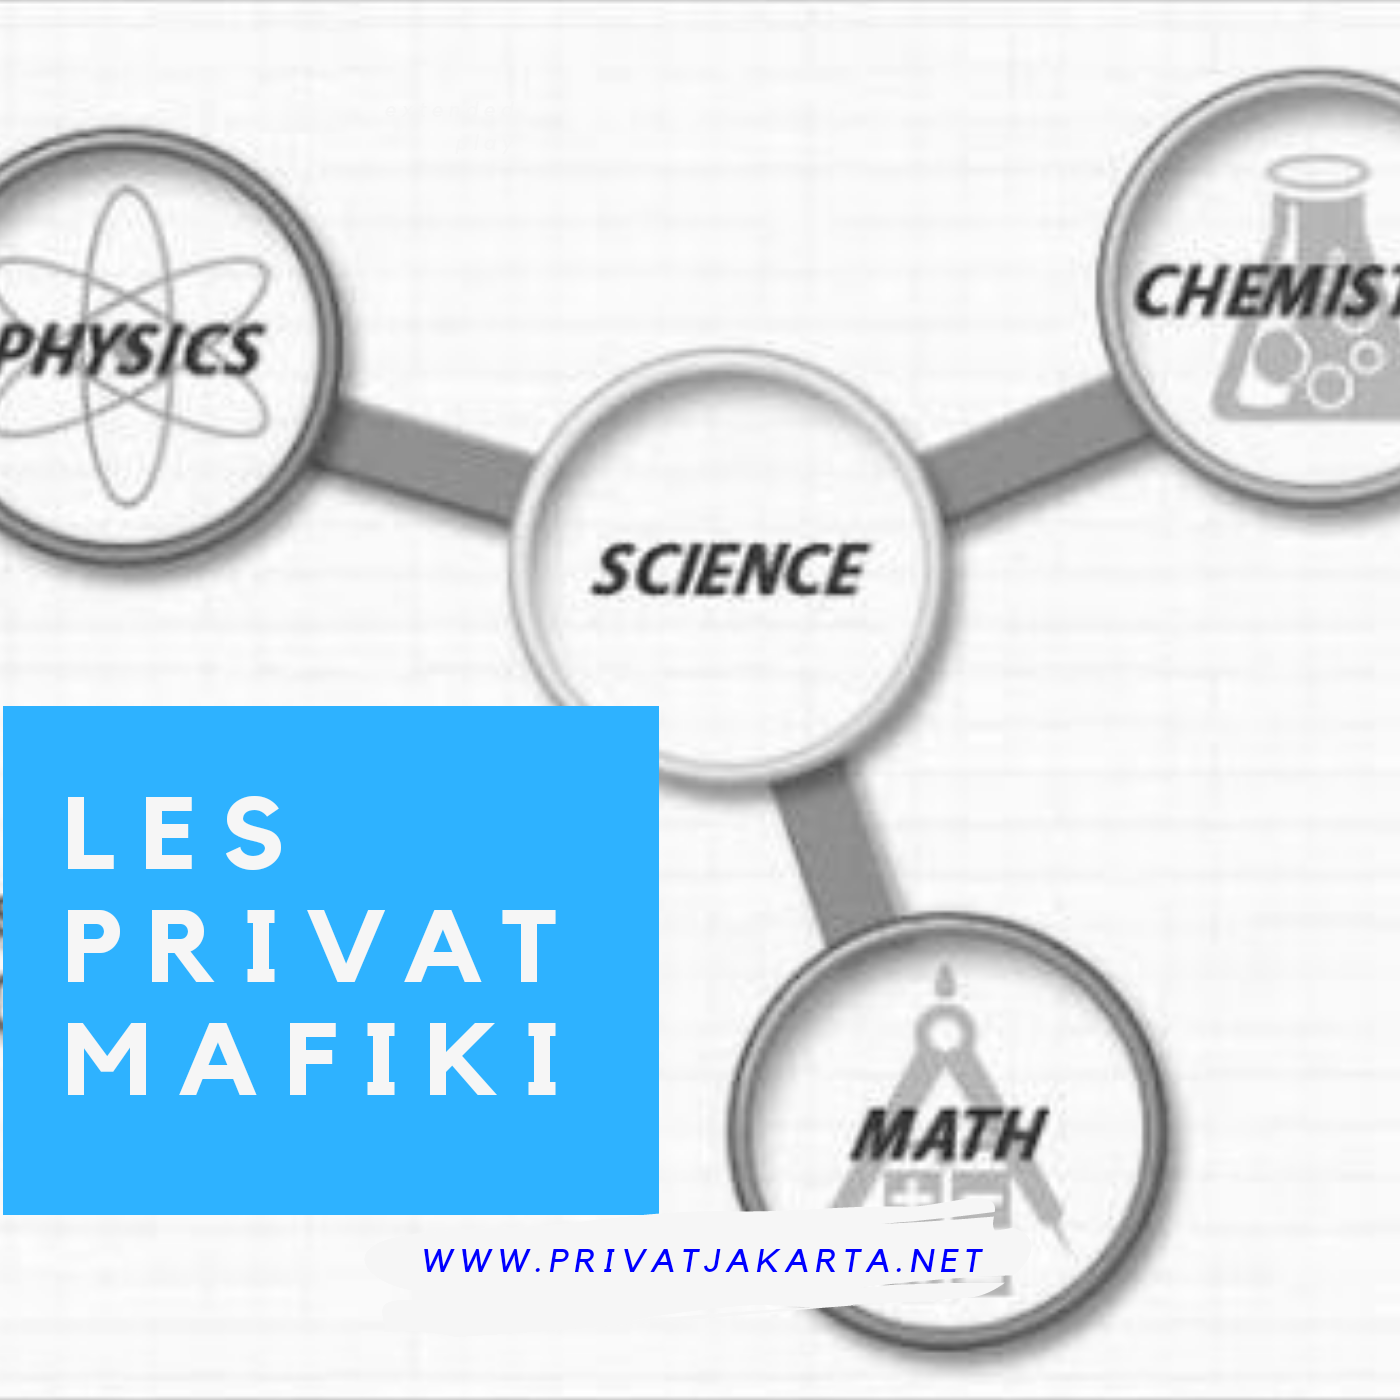 Keuntungan Mengikuti Les Privat Matematika Fisika Kimia